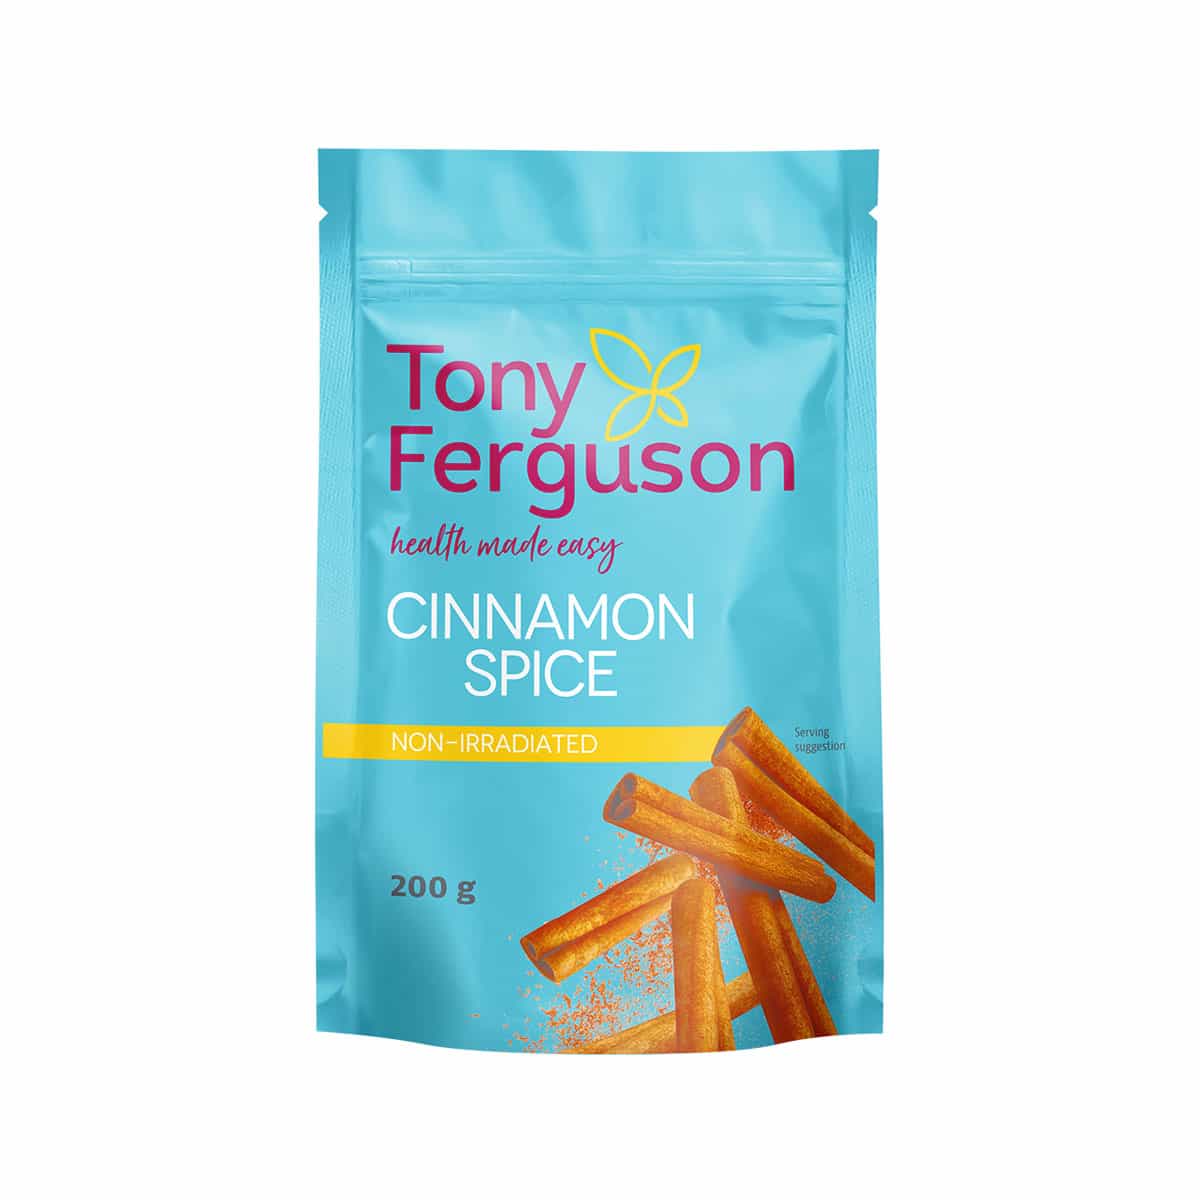 Tony Ferguson Cinnamon Spice - 200g